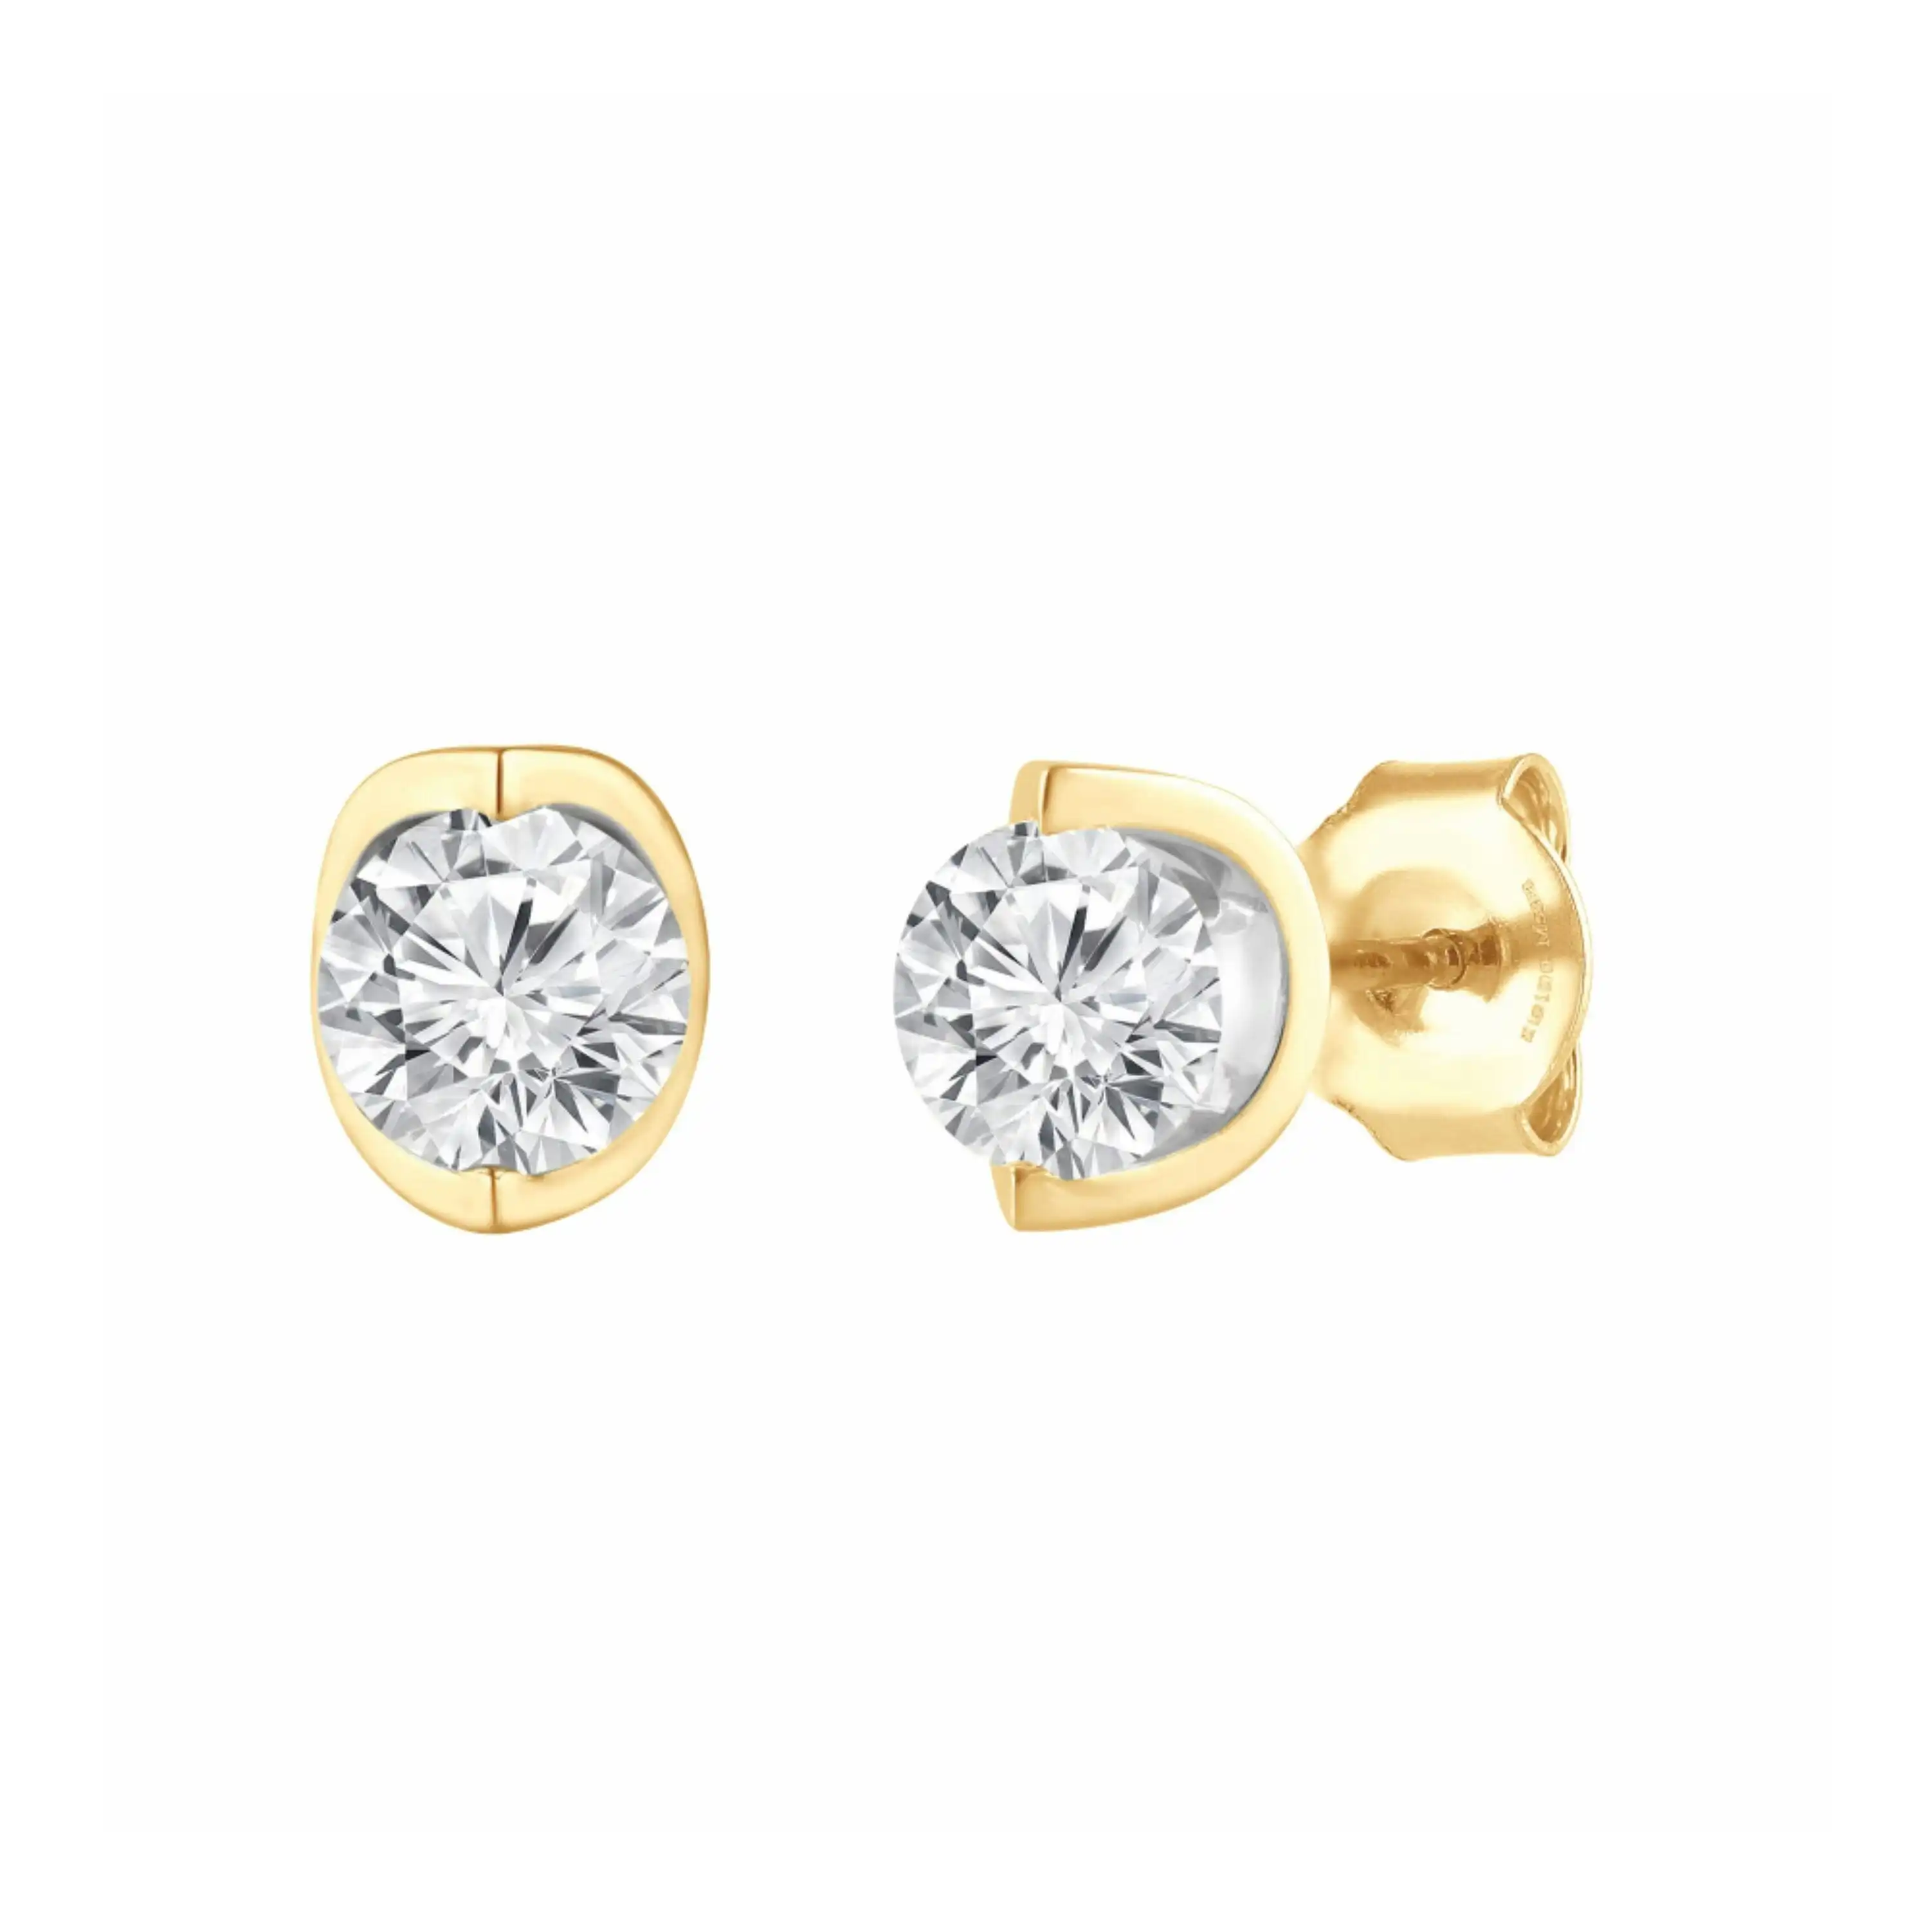 Meera Bezel Look 1.00ct Laboratory Grown Solitaire Diamond Earrings in 9ct Yellow Gold